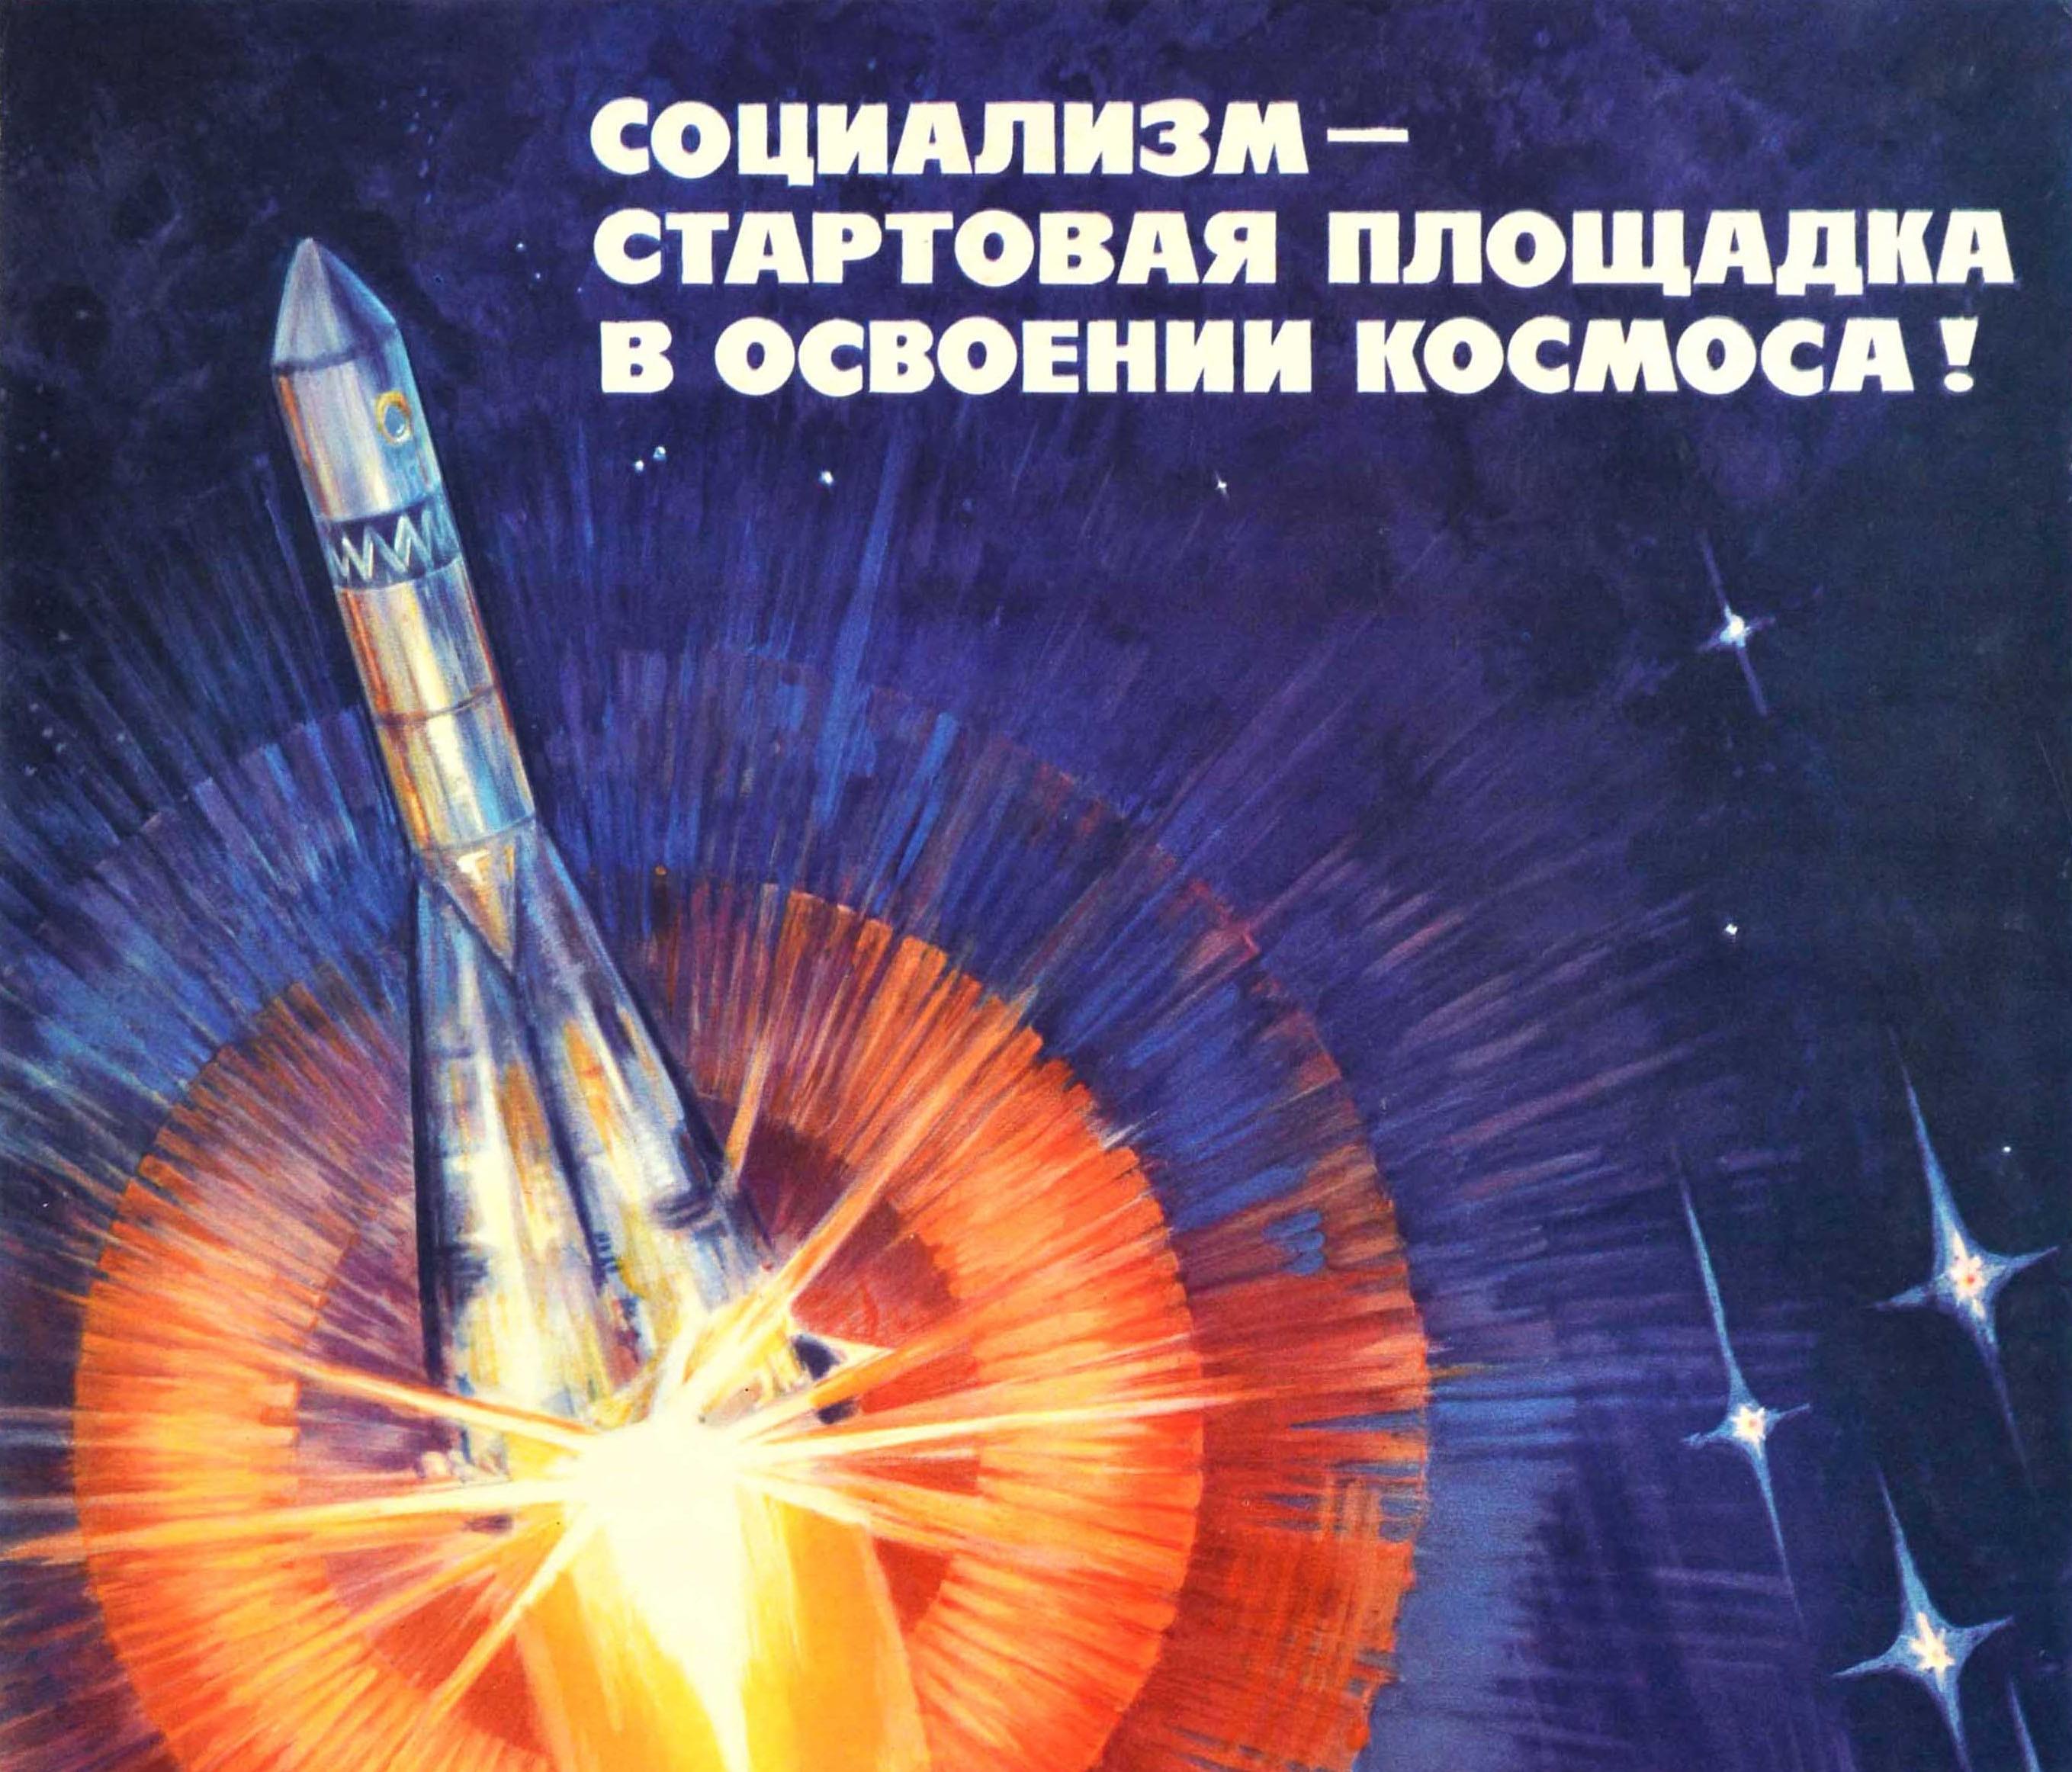 Original Vintage Soviet Poster Socialism Launching Pad To Space Exploration USSR - Print by Dzhanibekov